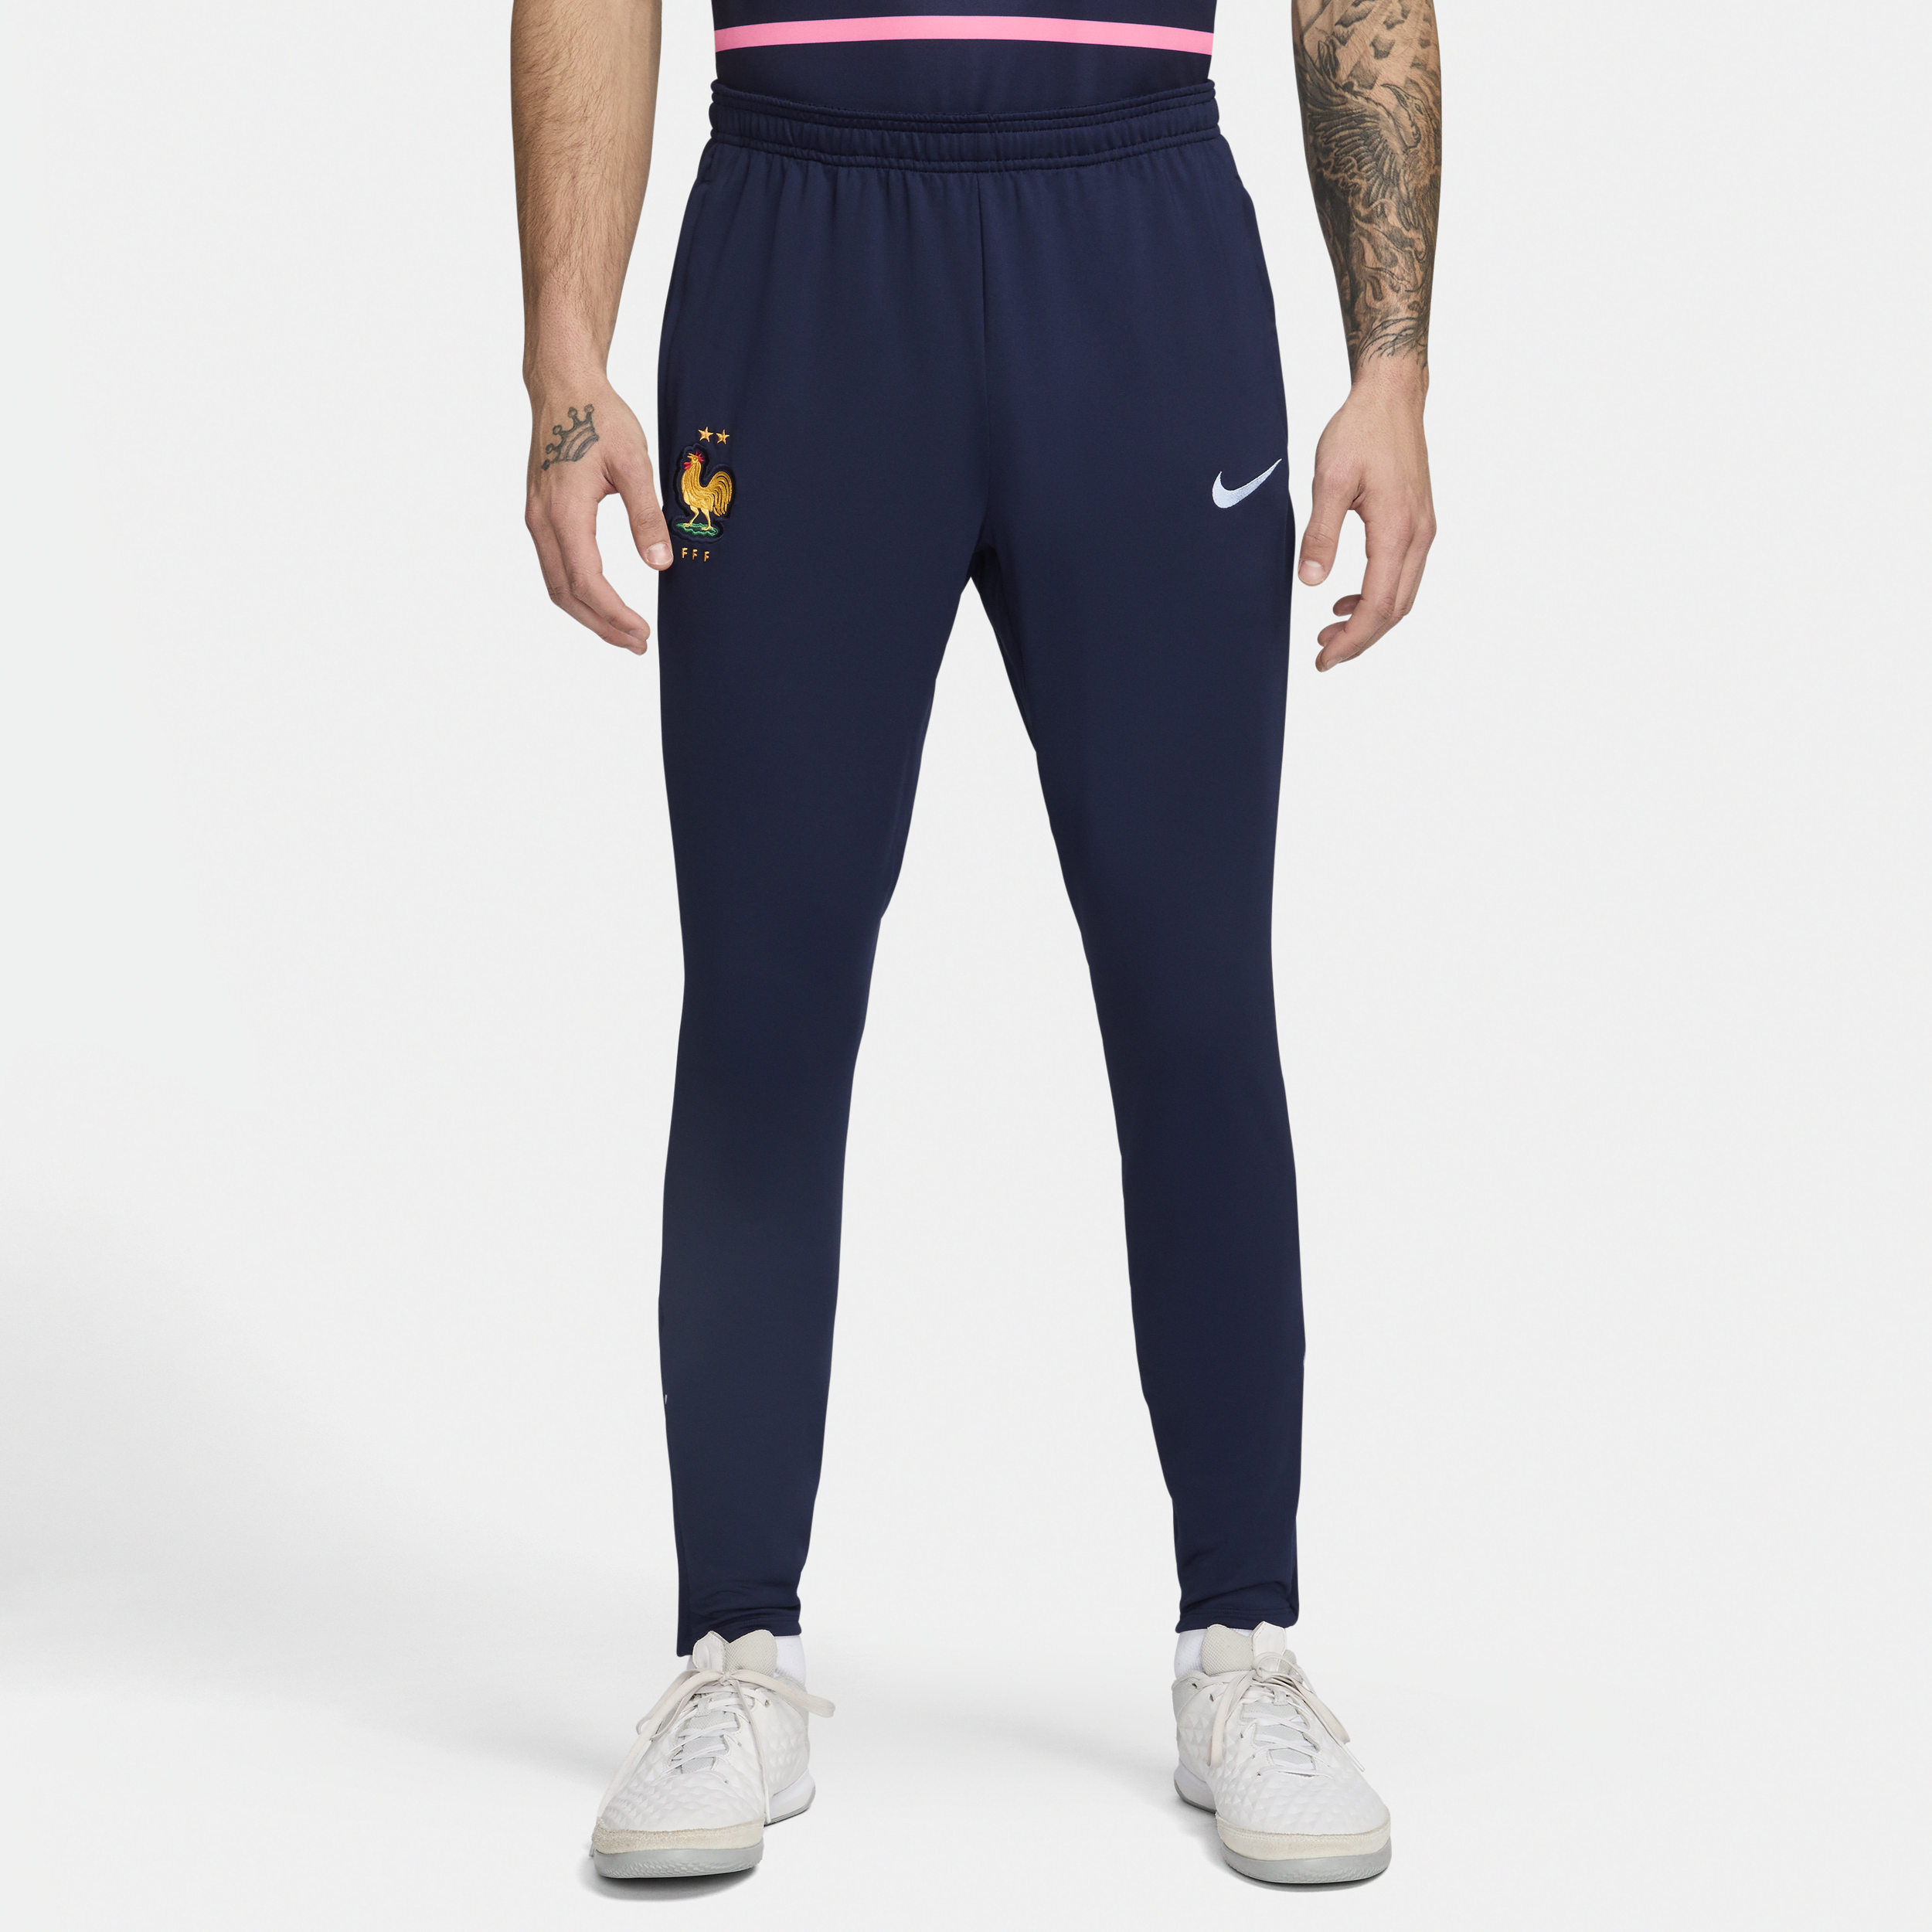 FFF Strike Nike Dri-FIT knit voetbalbroek voor heren - Blauw